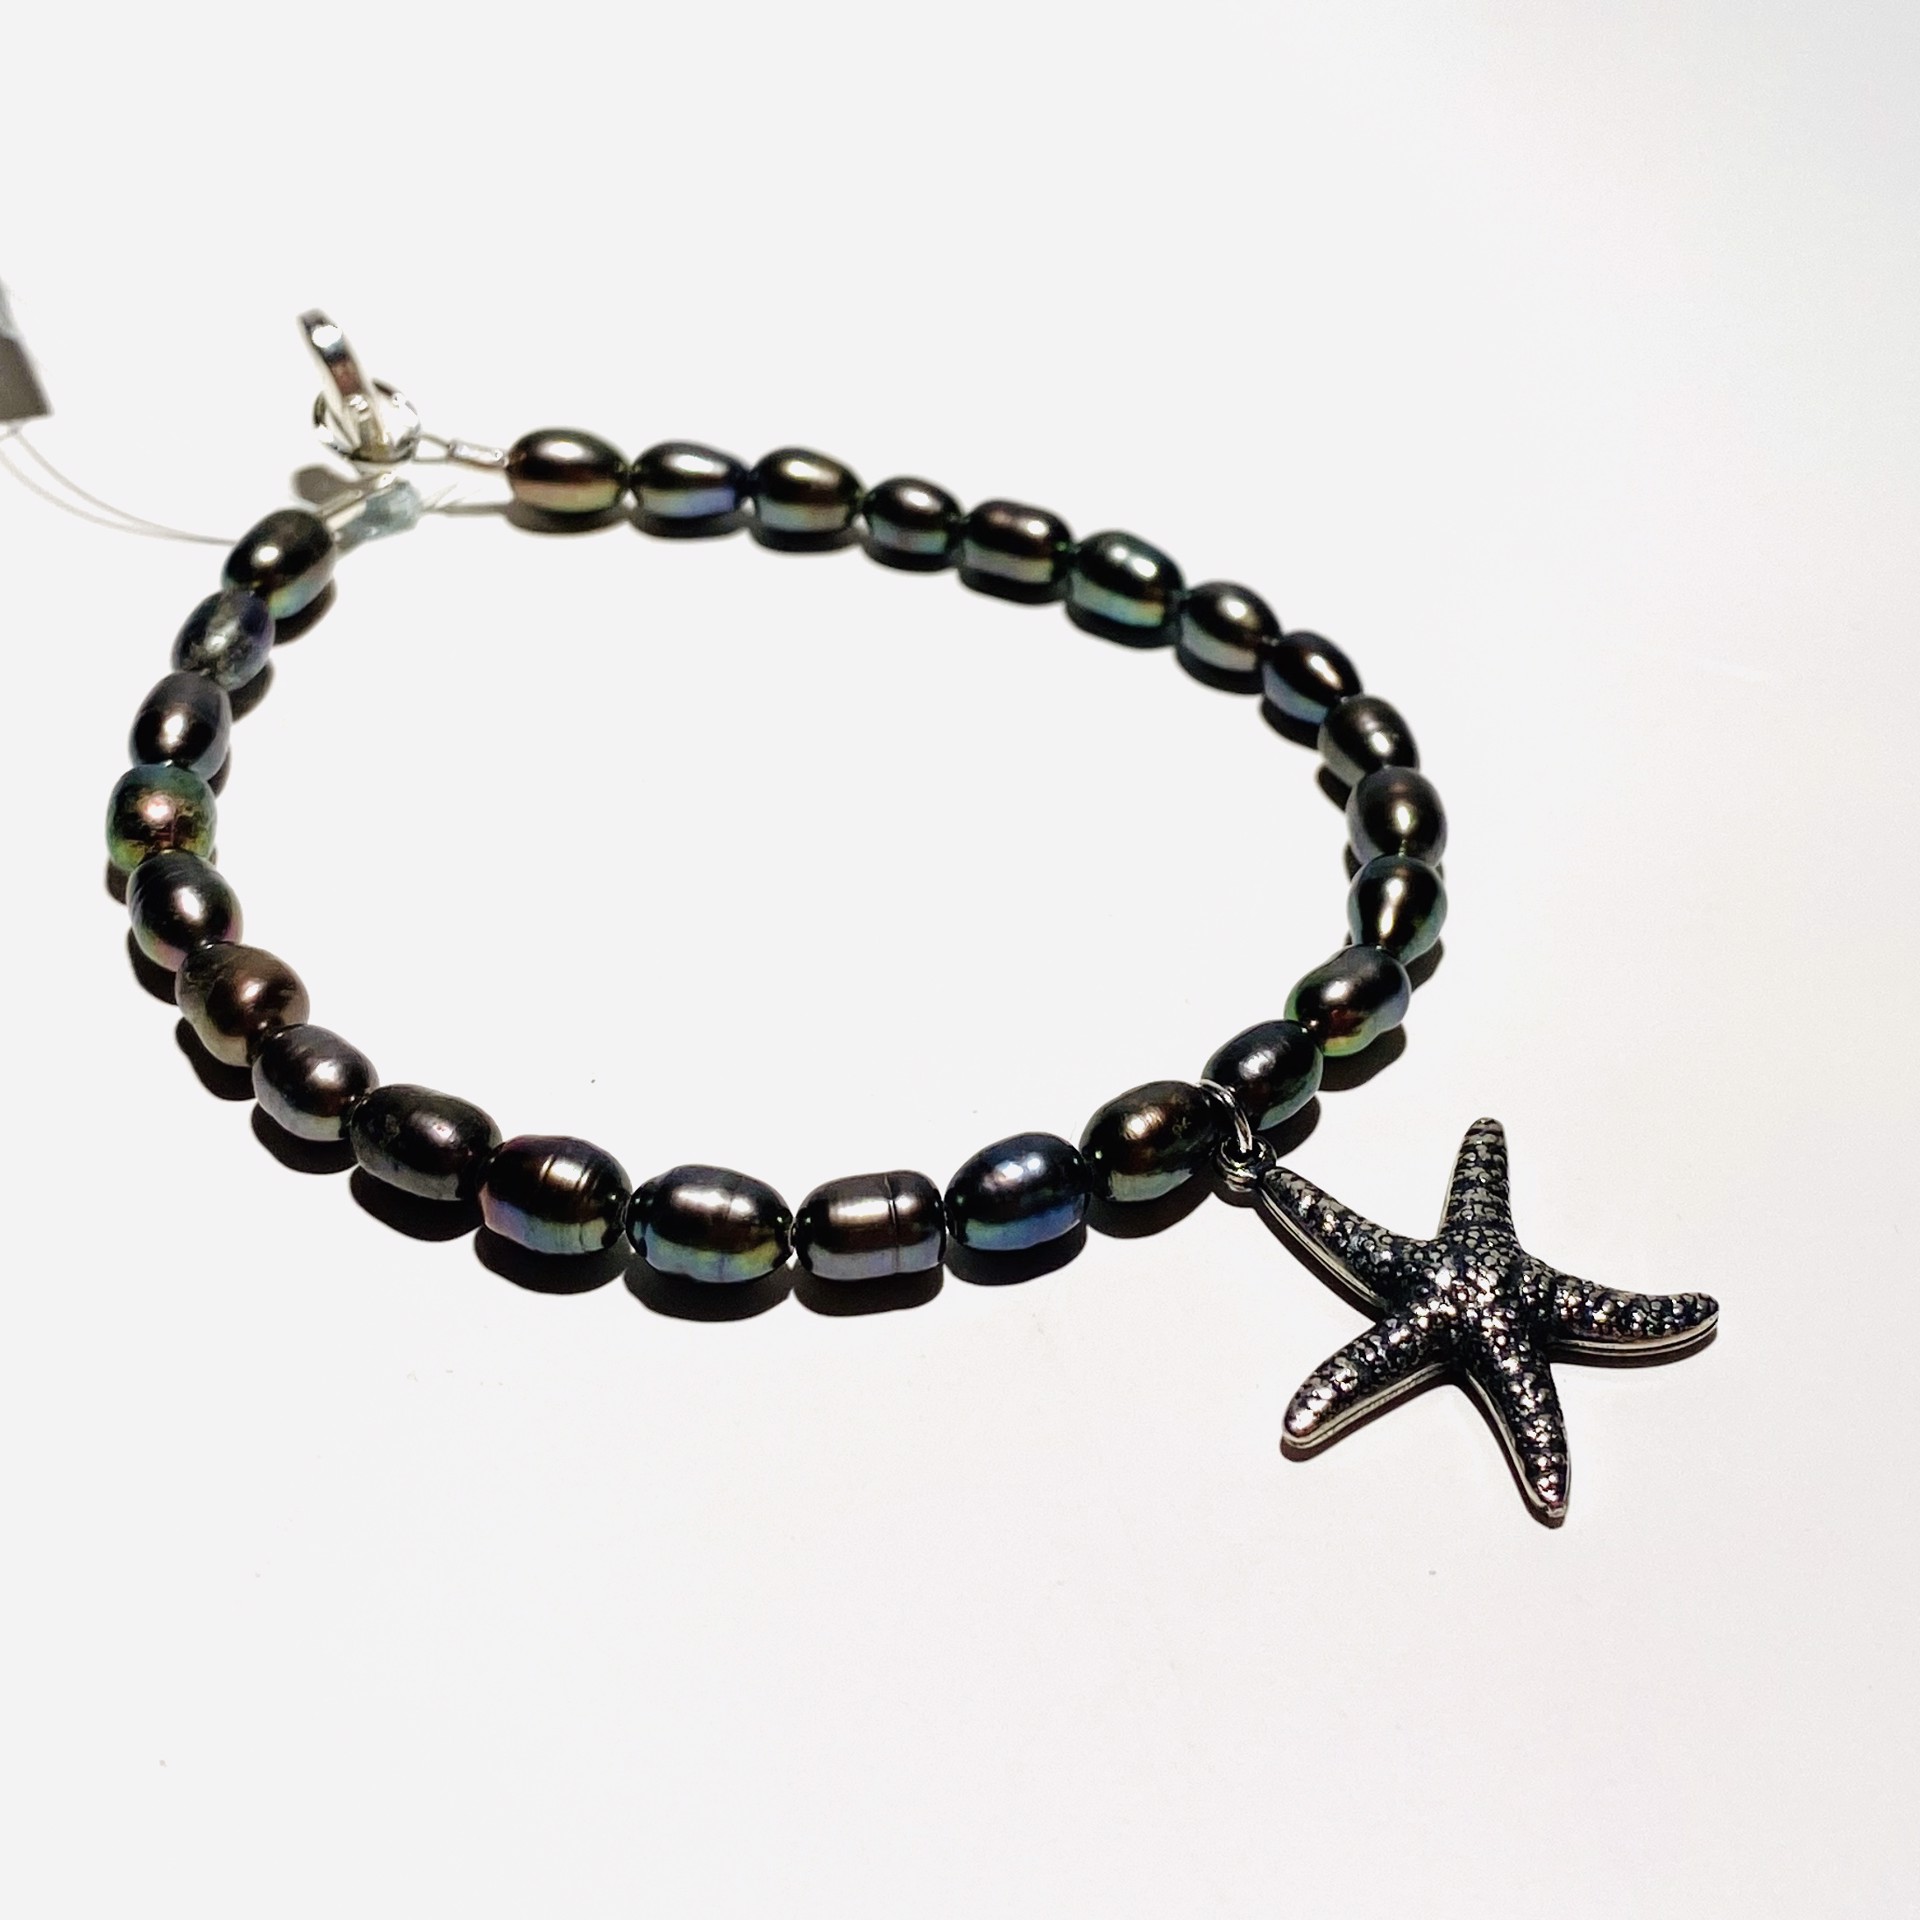 Peacock Pearl Bracelet with starfish charm, P3 by Nance Trueworthy